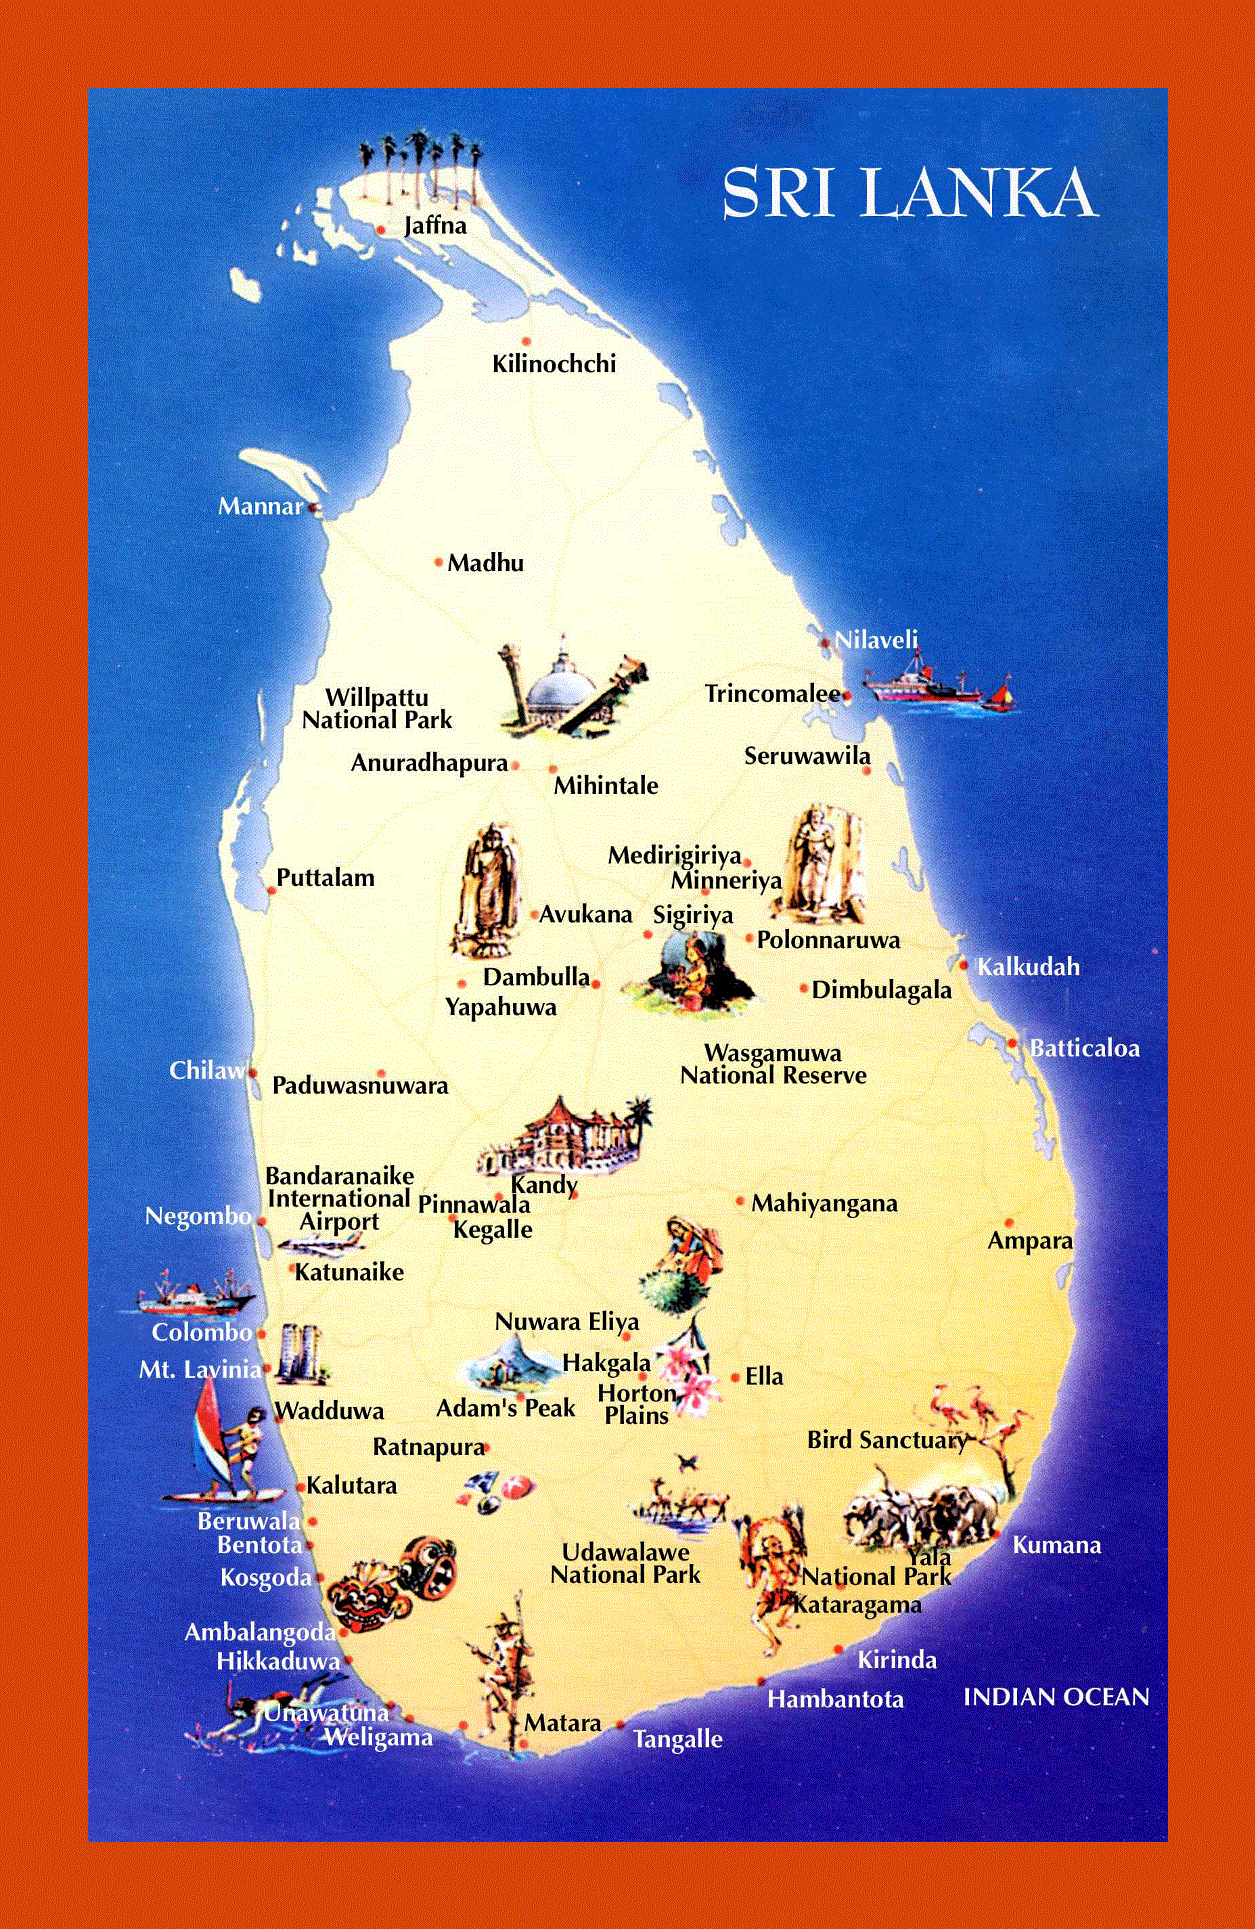 Travel map of Sri Lanka